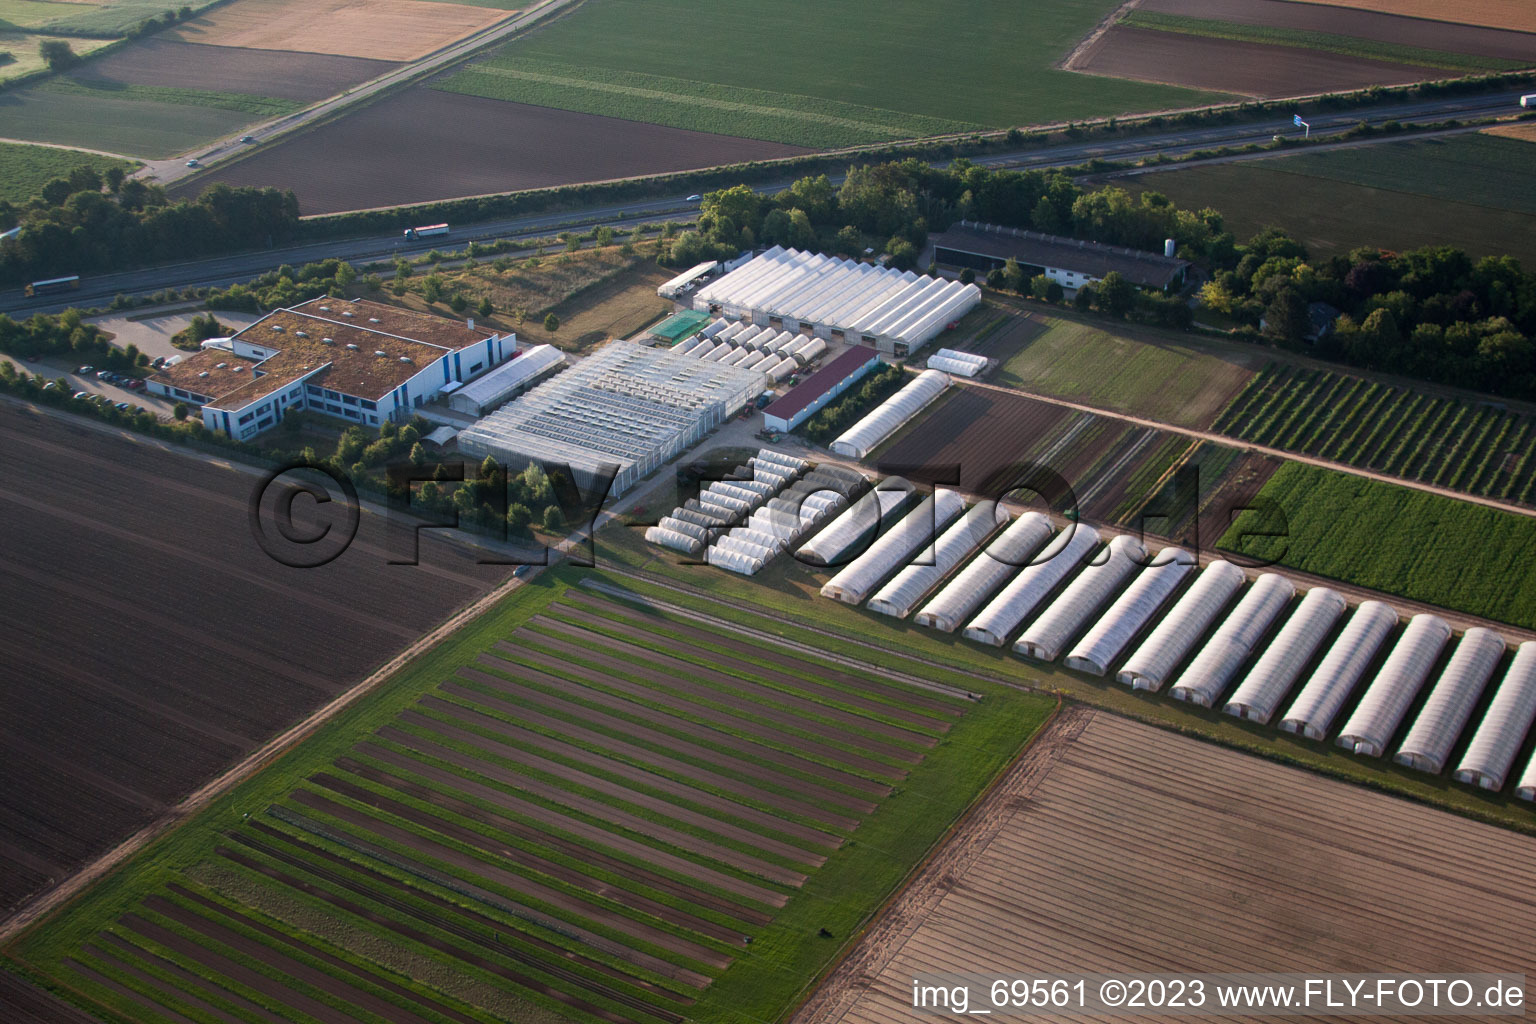 Aerial photograpy of Enza Zaden Germany GmbH in the district Dannstadt in Dannstadt-Schauernheim in the state Rhineland-Palatinate, Germany